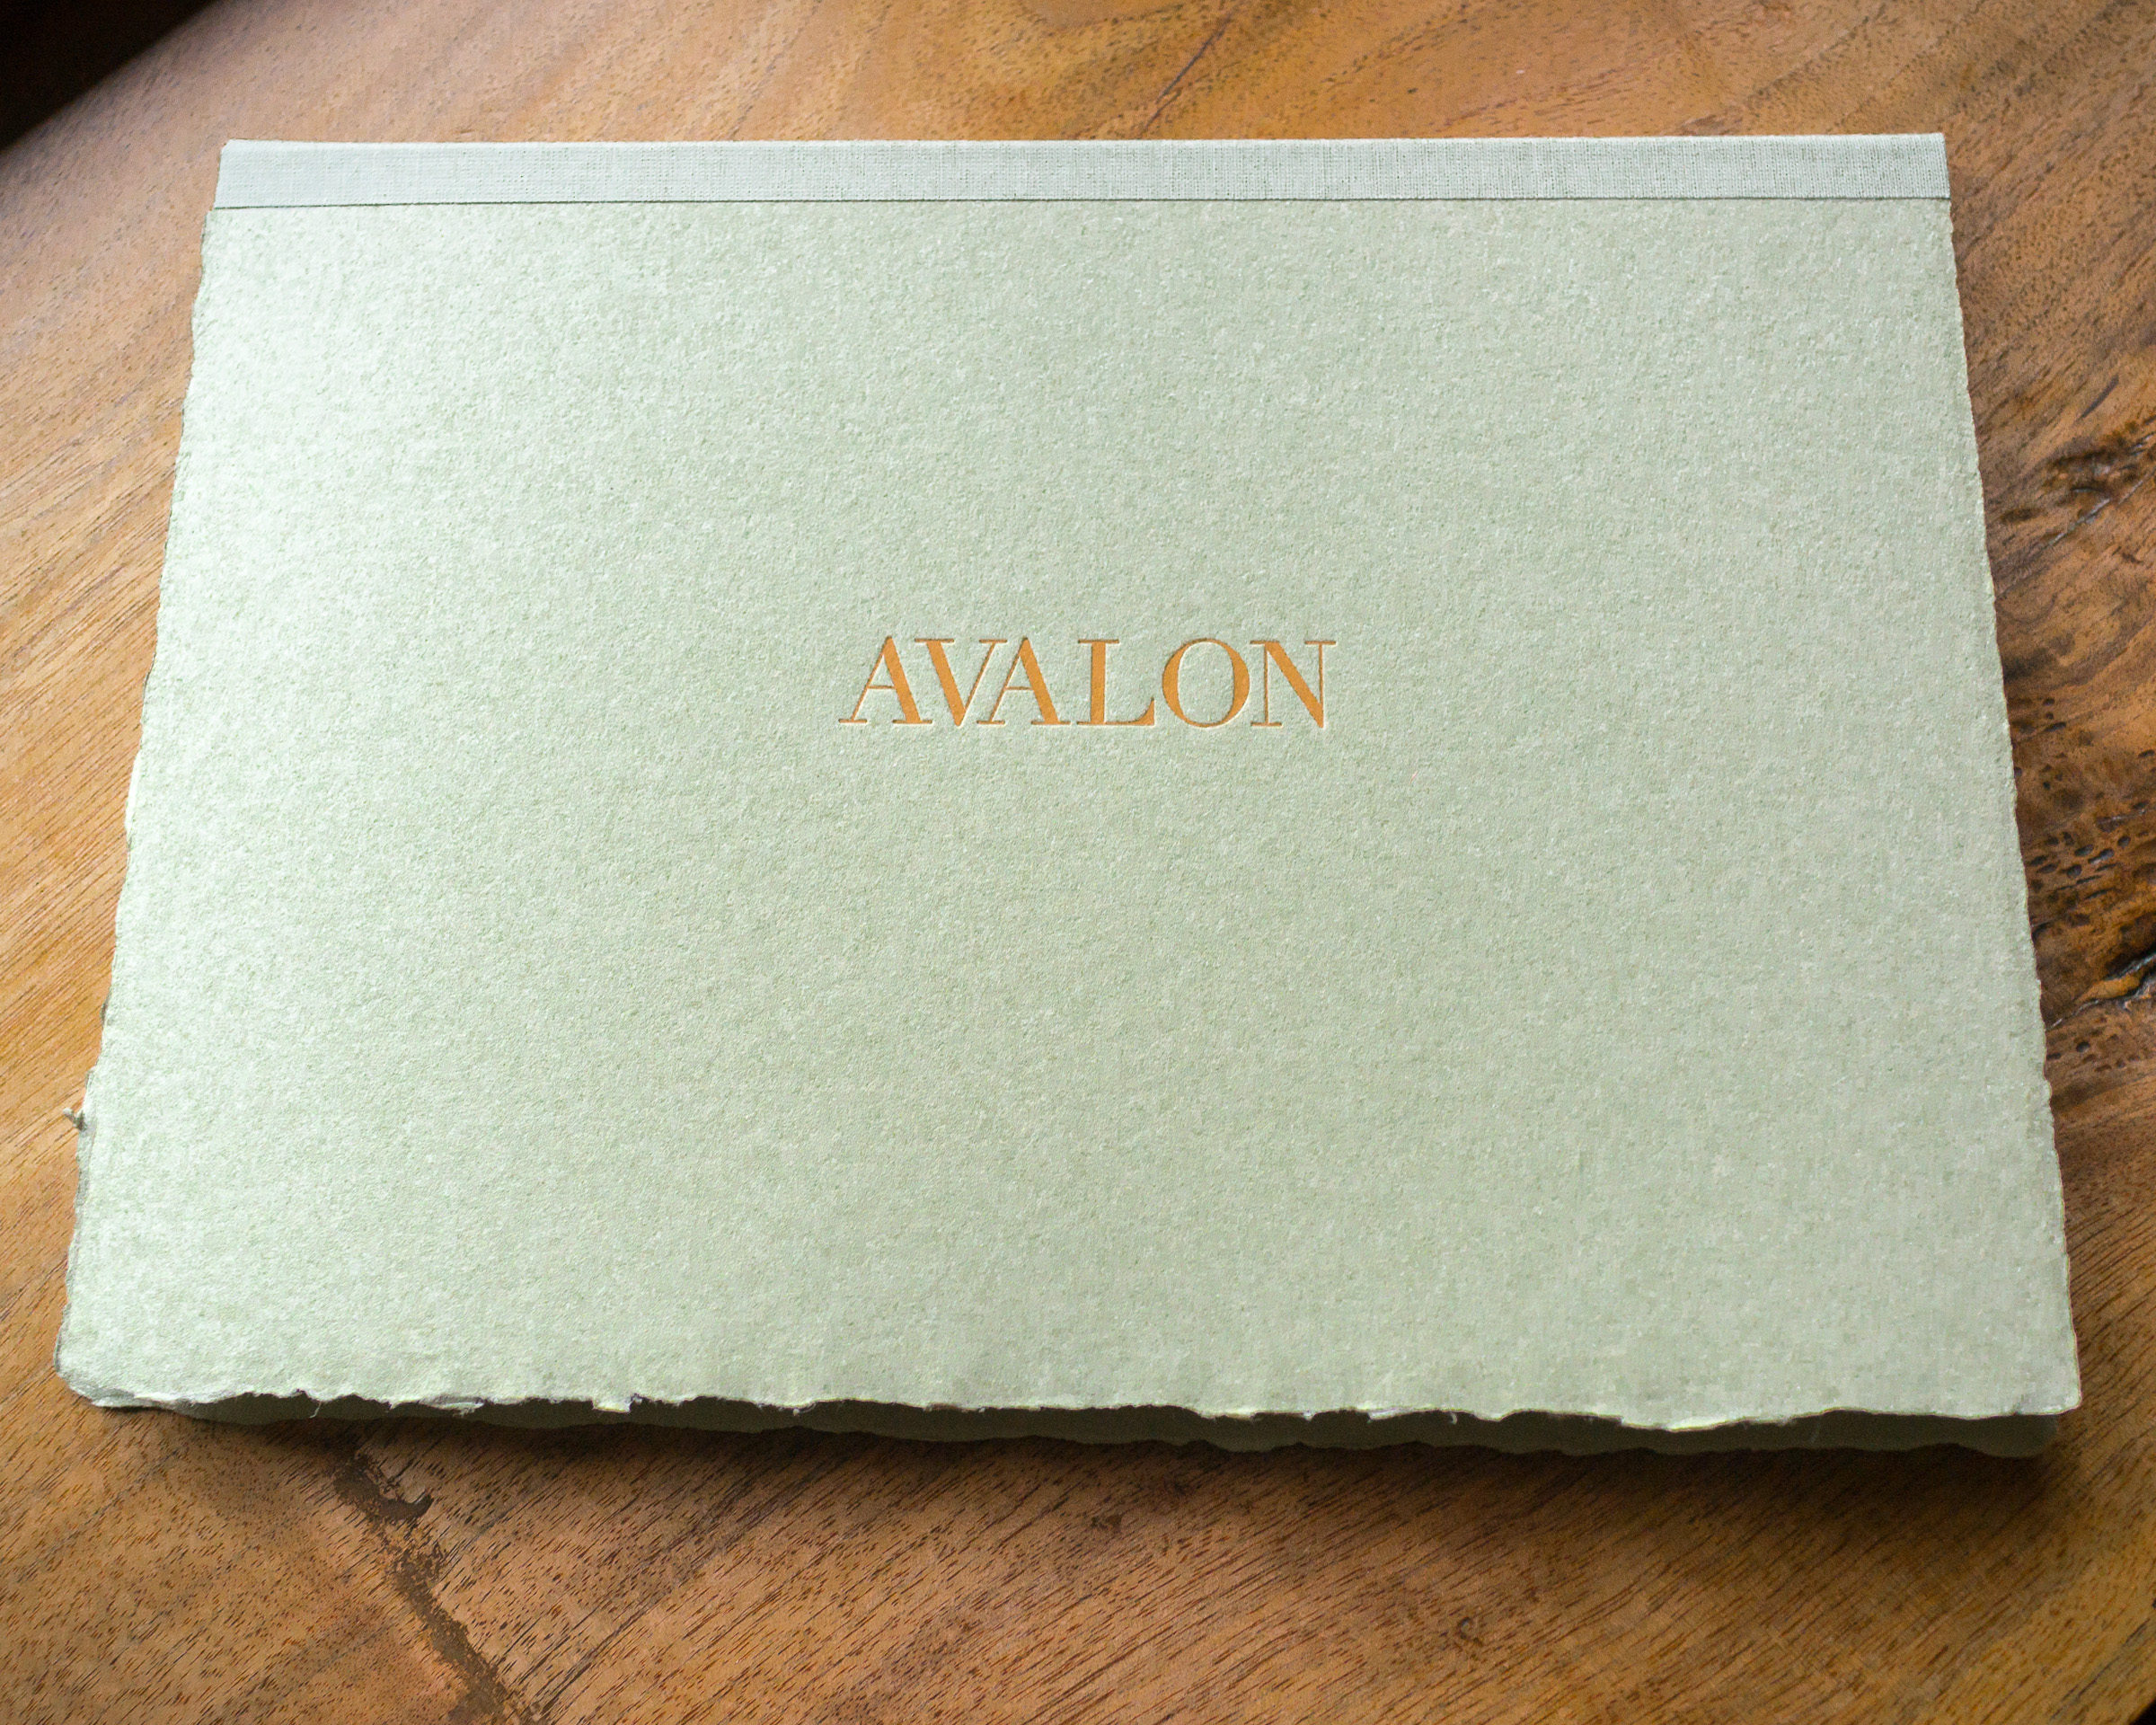 AvalonPostcard-2.jpg